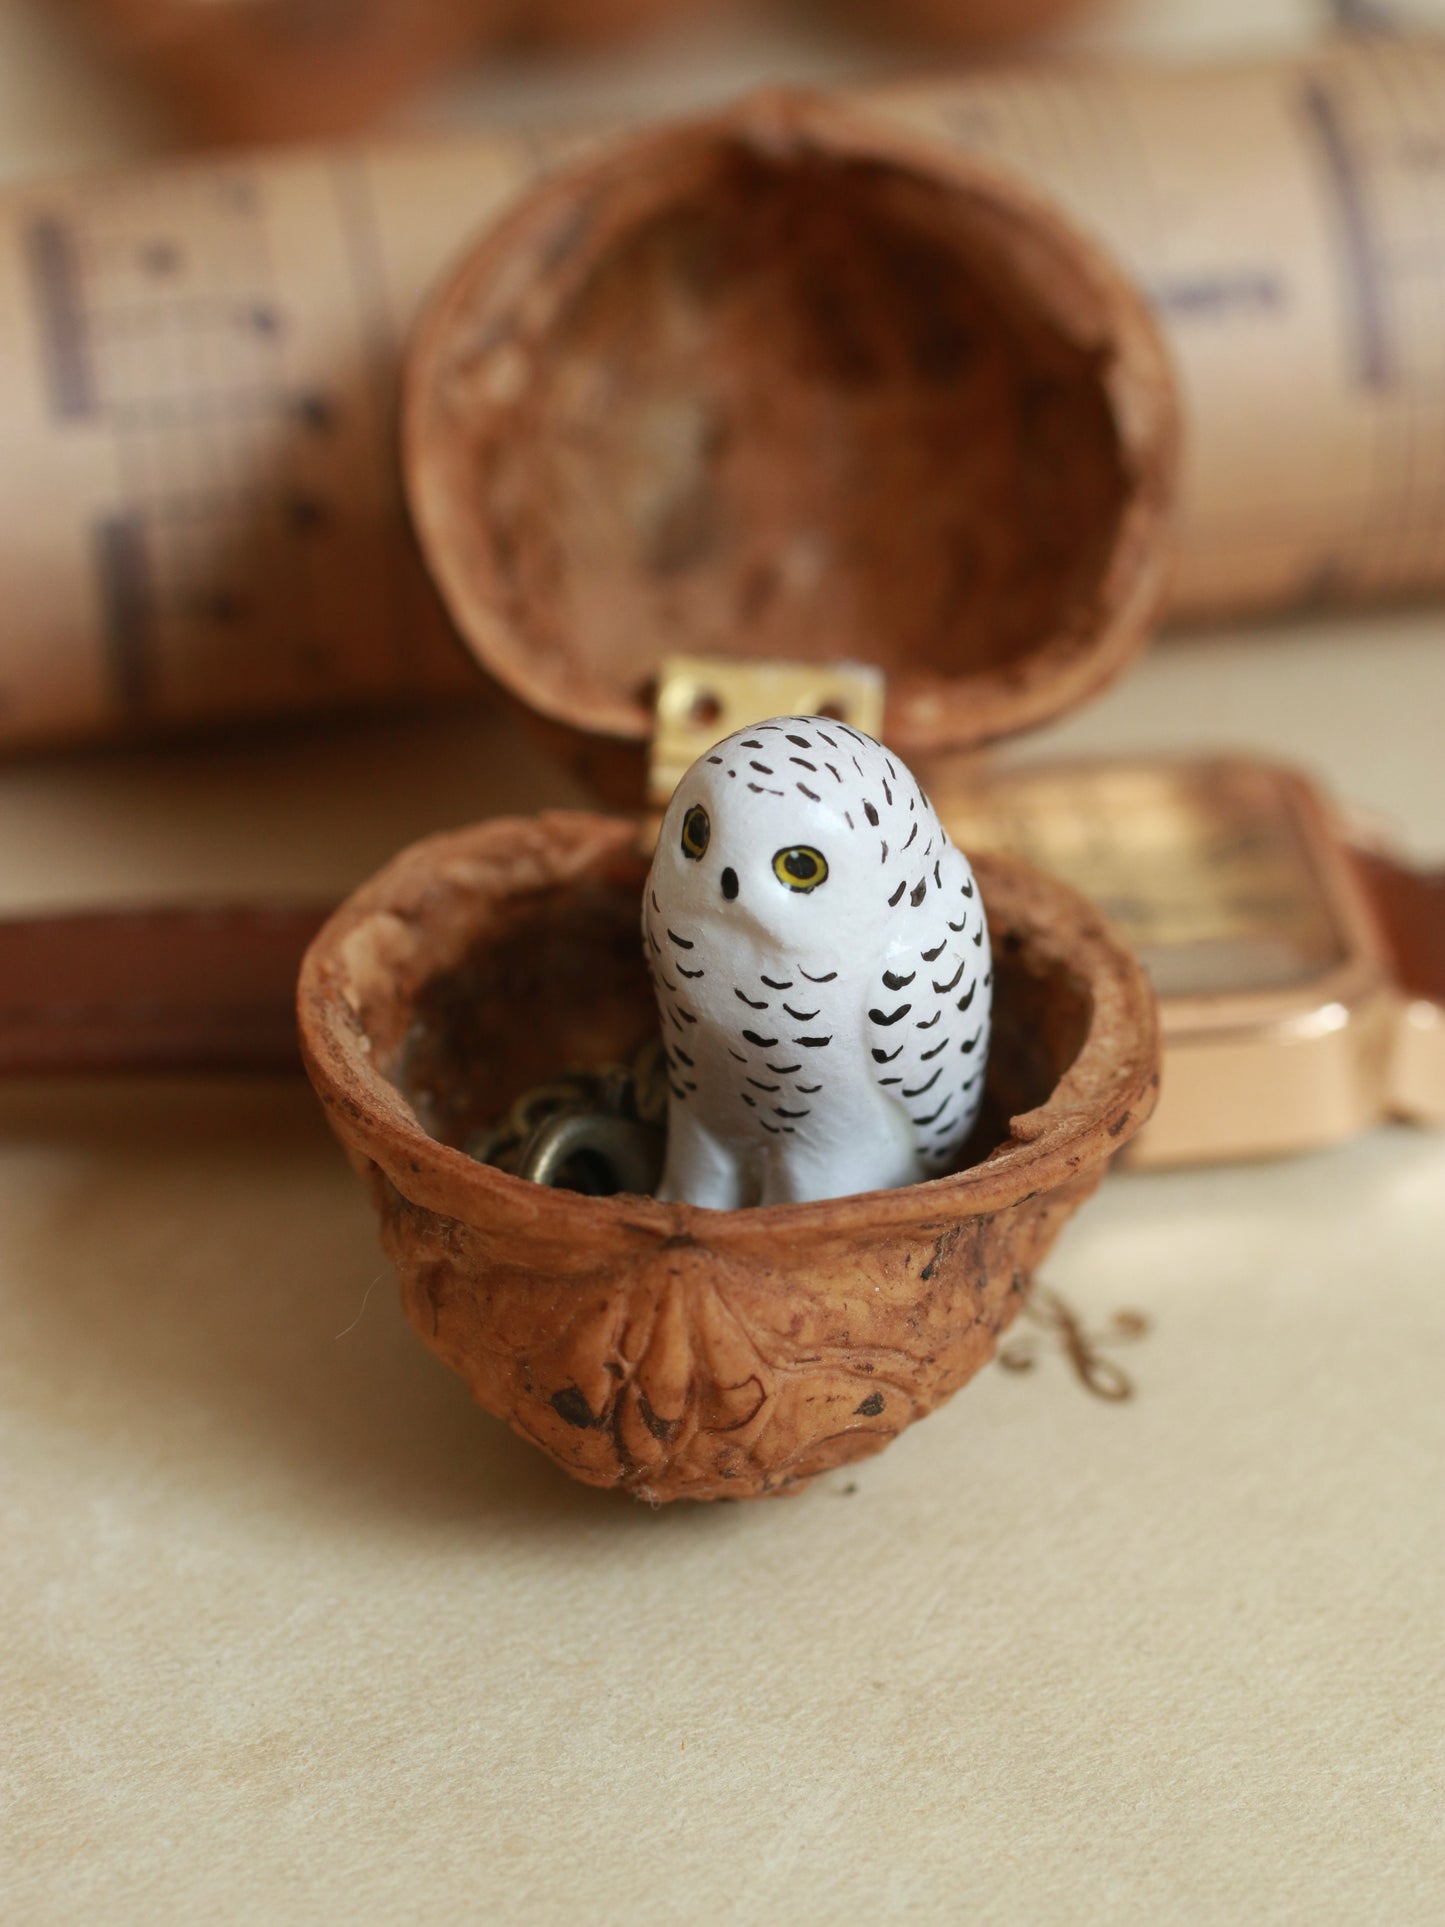 Snowy owl necklace in a nutshell box